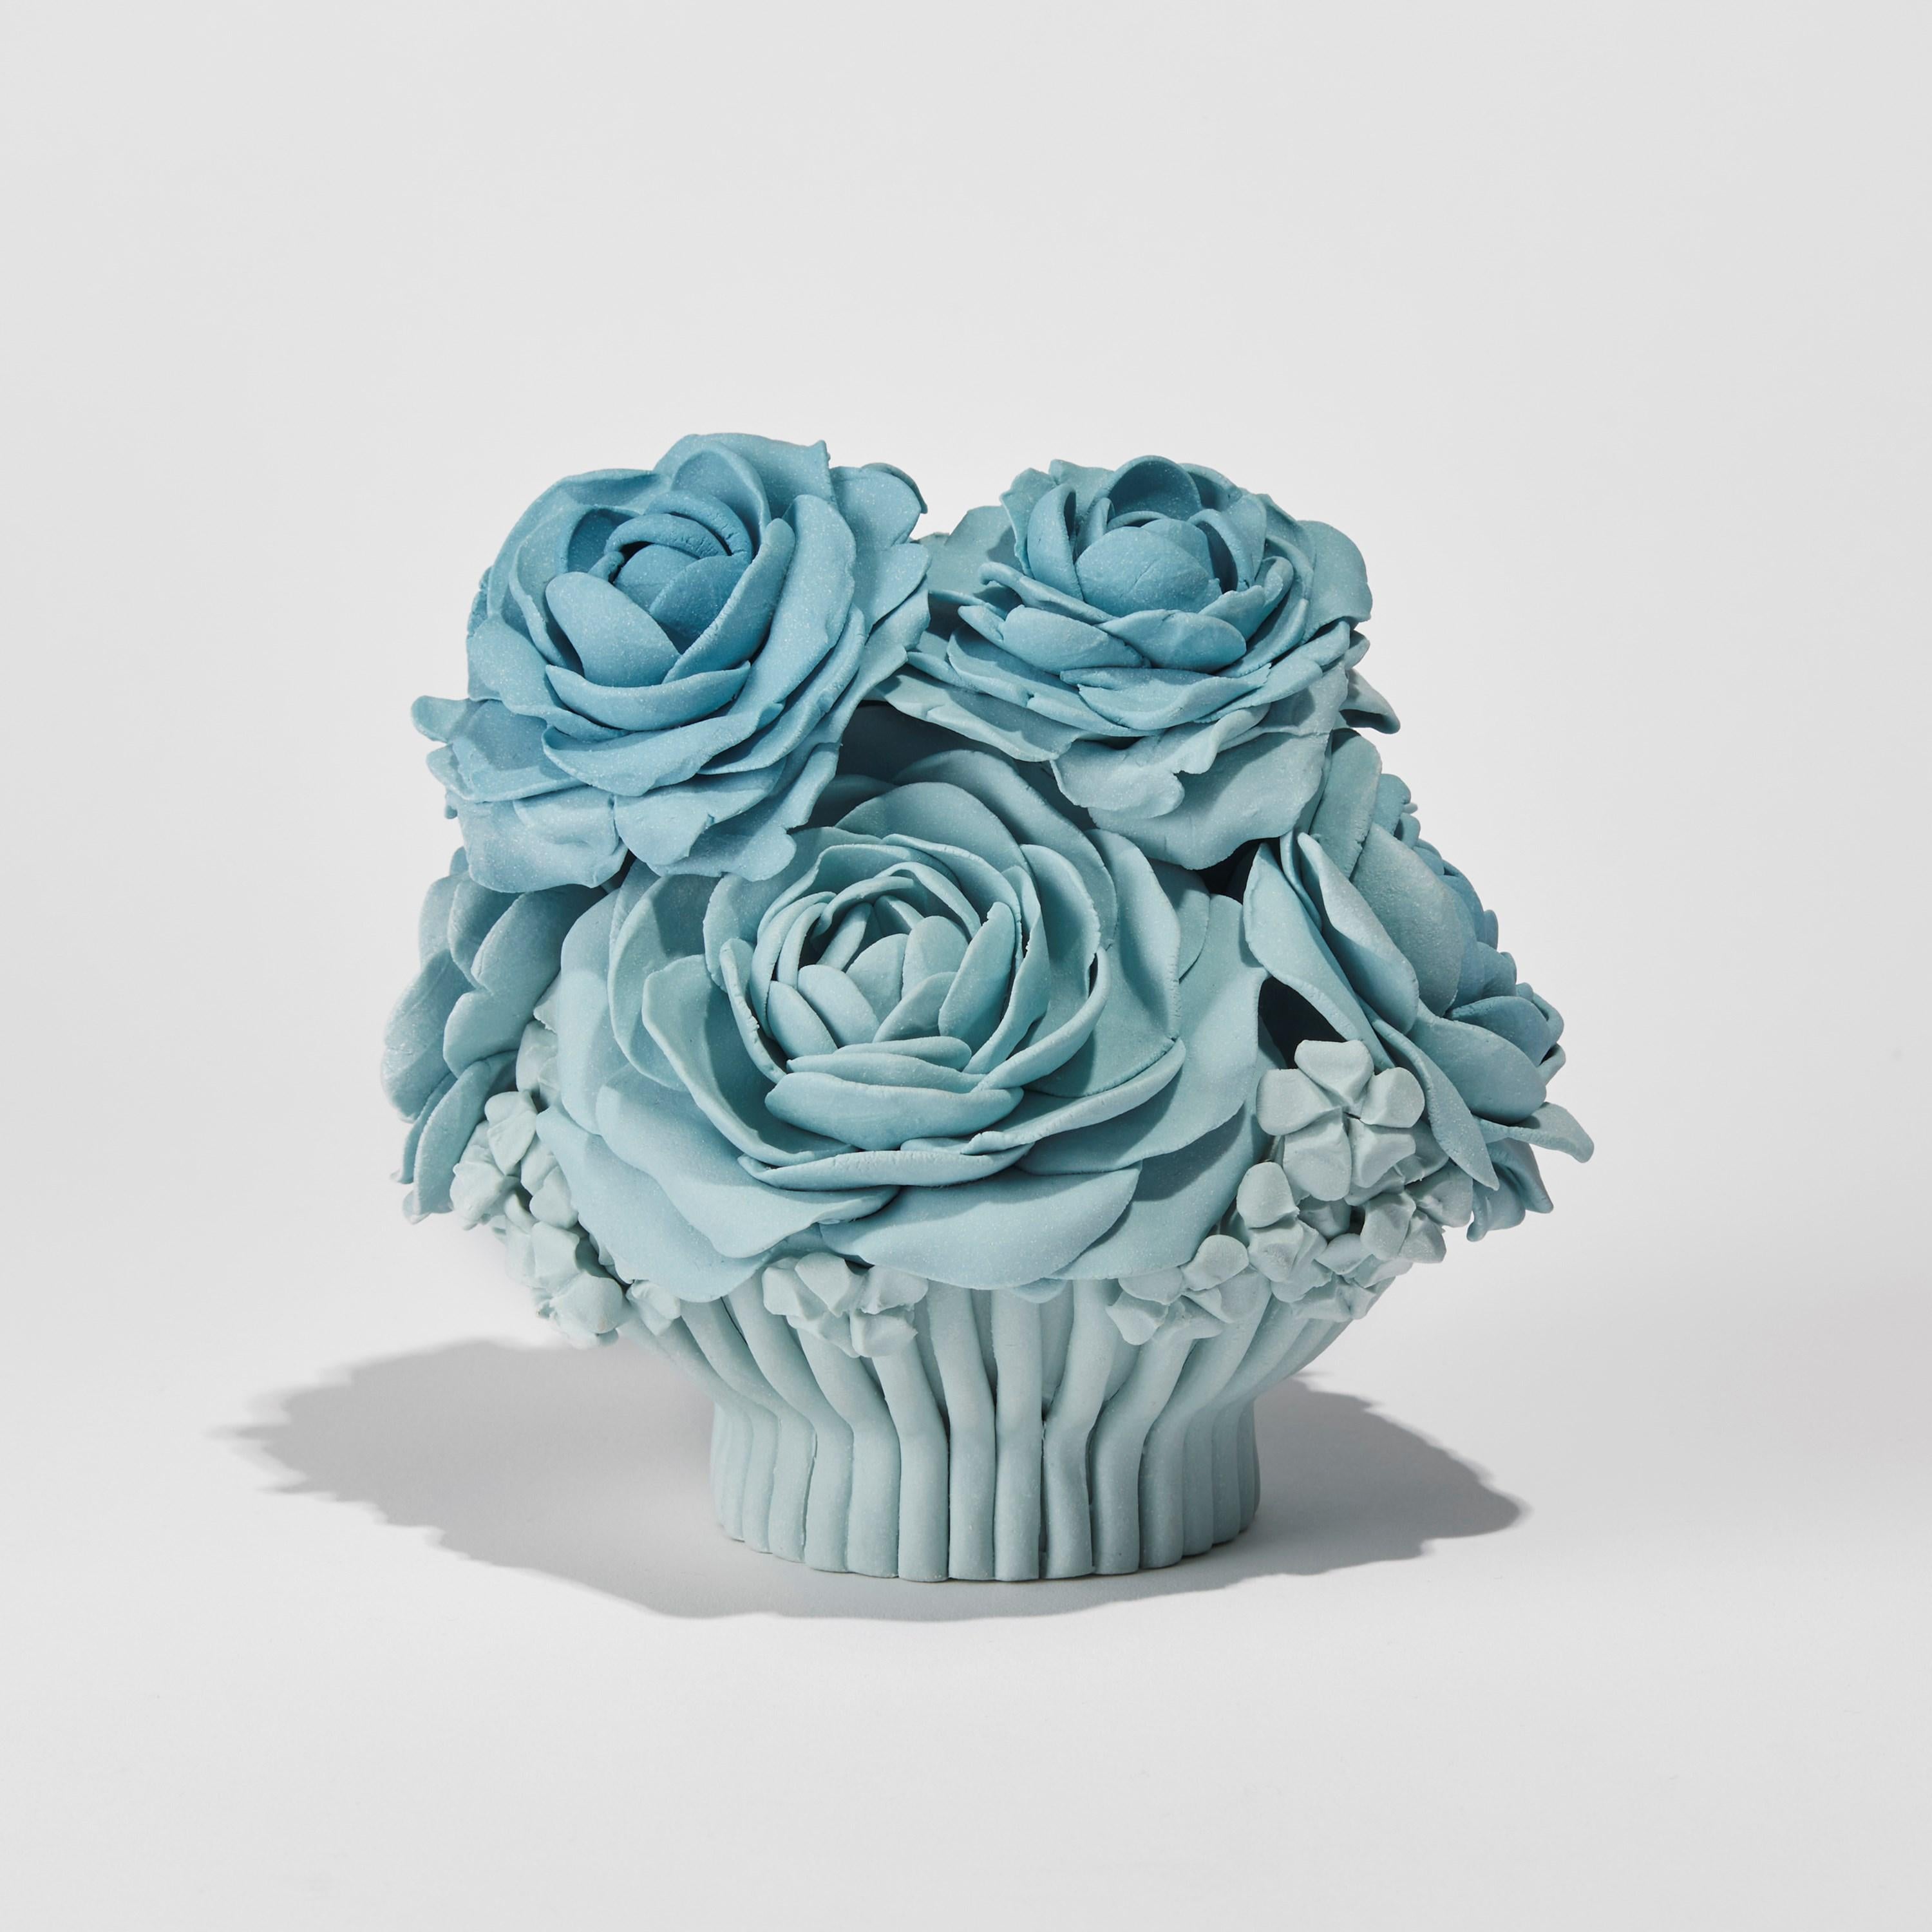 Organic Modern Joyce, a Pastel Blue Porcelain Floral Sculptural Centrepiece by Vanessa Hogge